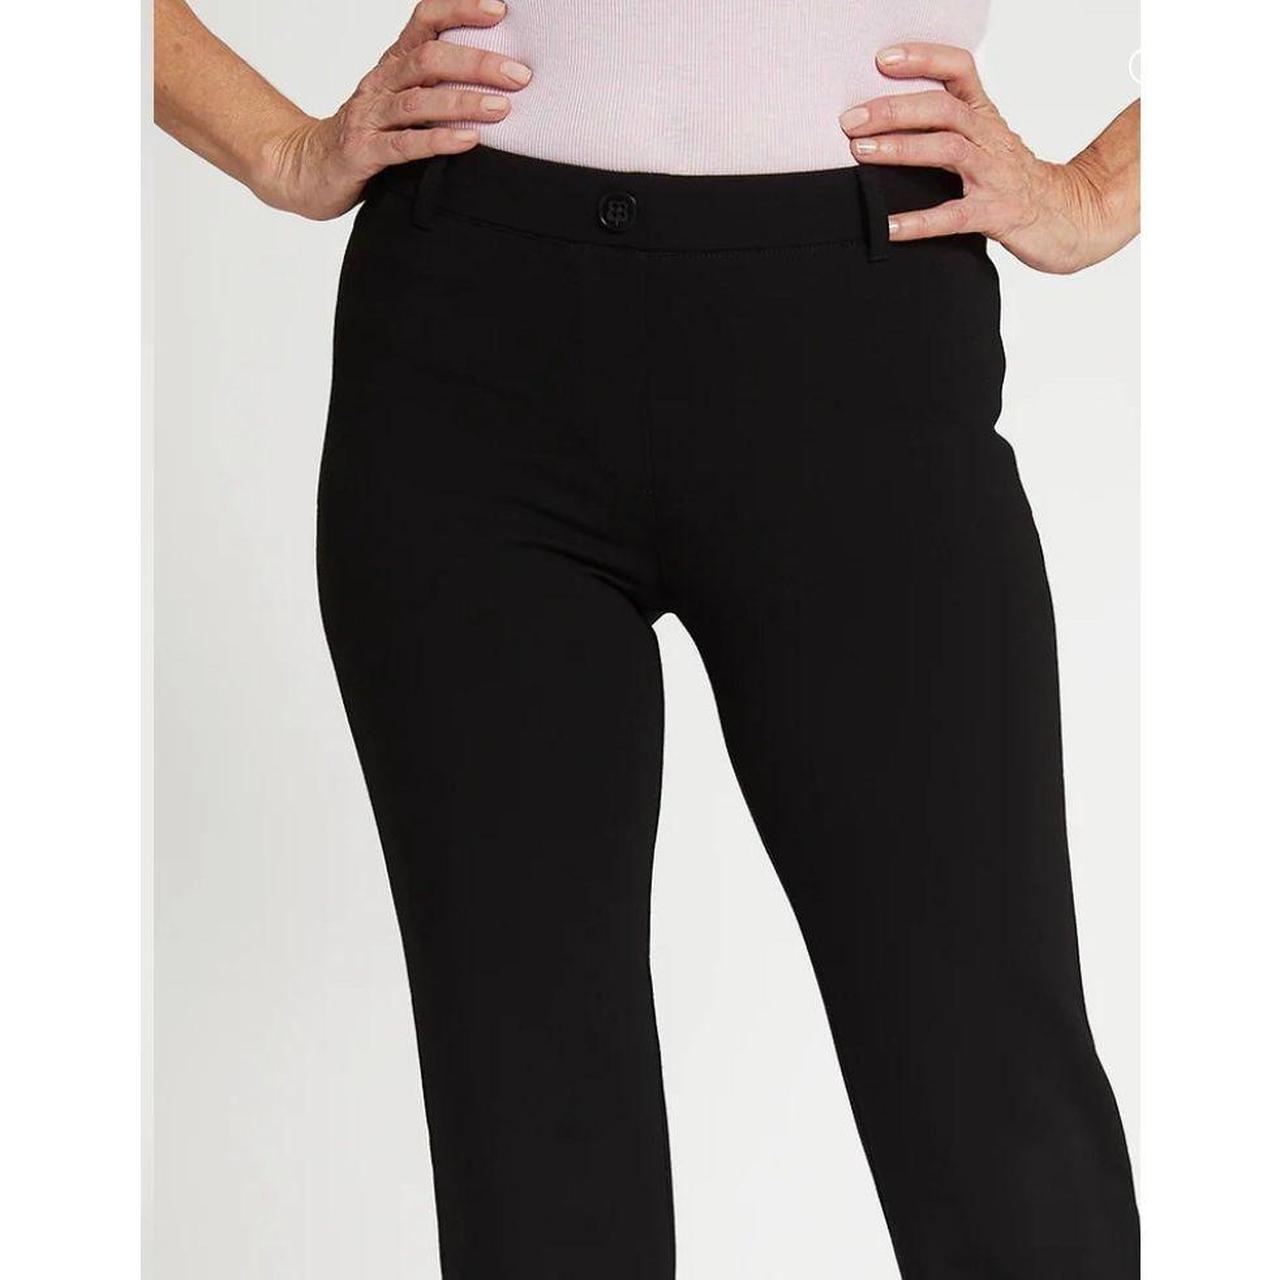 Betabrand Classic Dress Pant Yoga Pants Black Boot - Depop